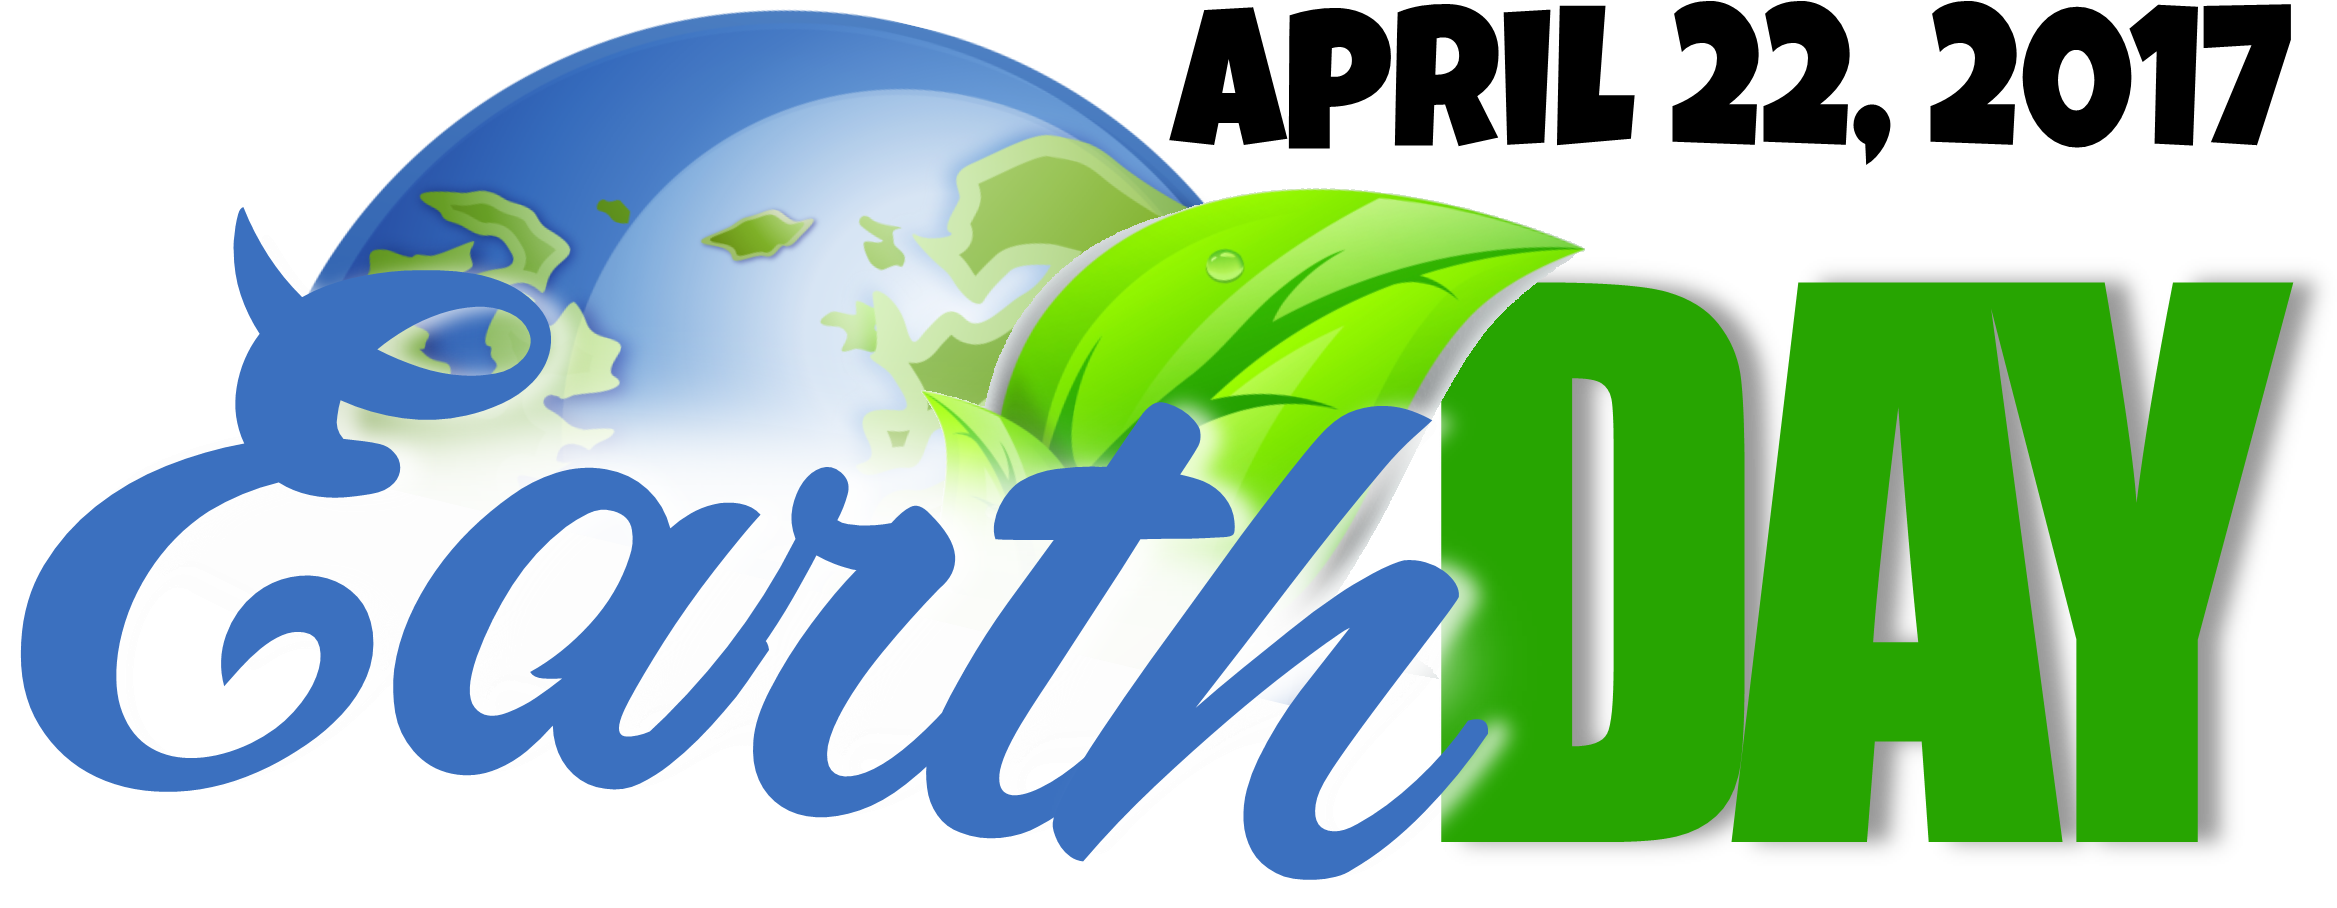 Earth Day (2512x1183)